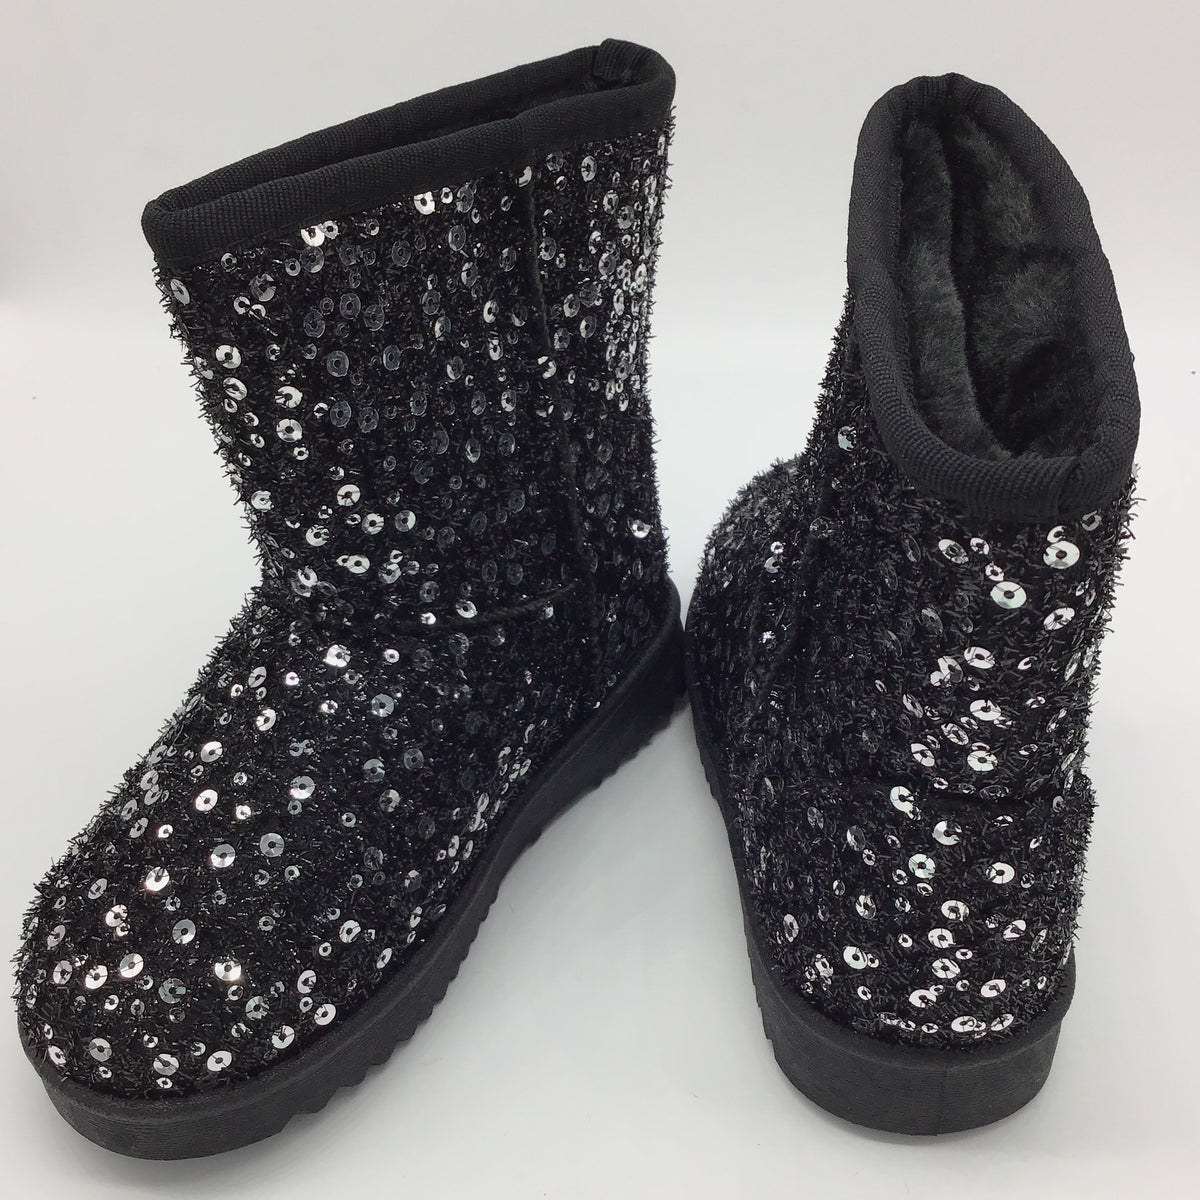 Kids Sequin Sparkle Boots (Silver) (Sizes 9 - 4)